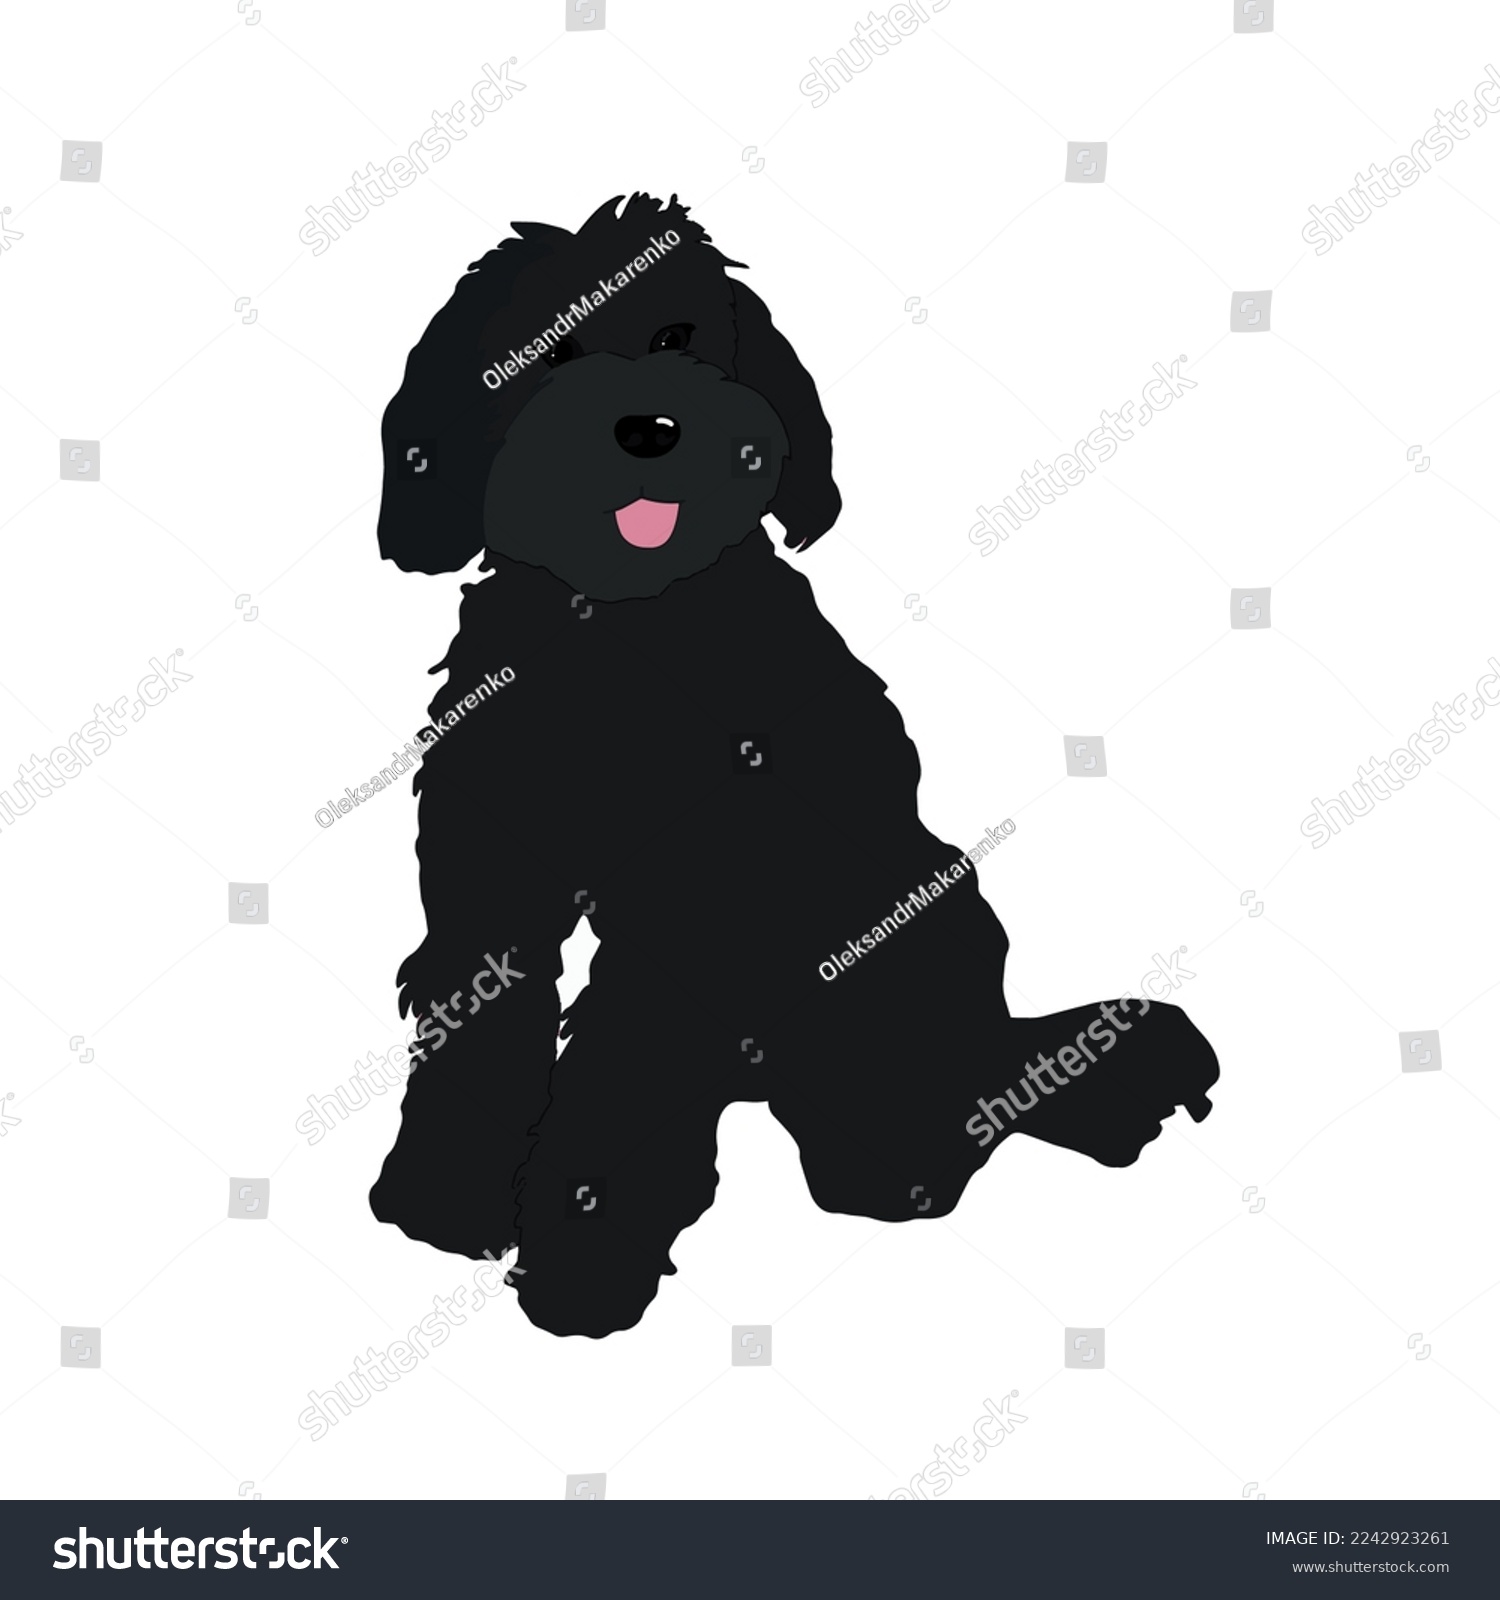 SVG of Black labradoodle isolated on white background. Dark poodle vector illustration. Cute big fluffy dog sitting icon svg